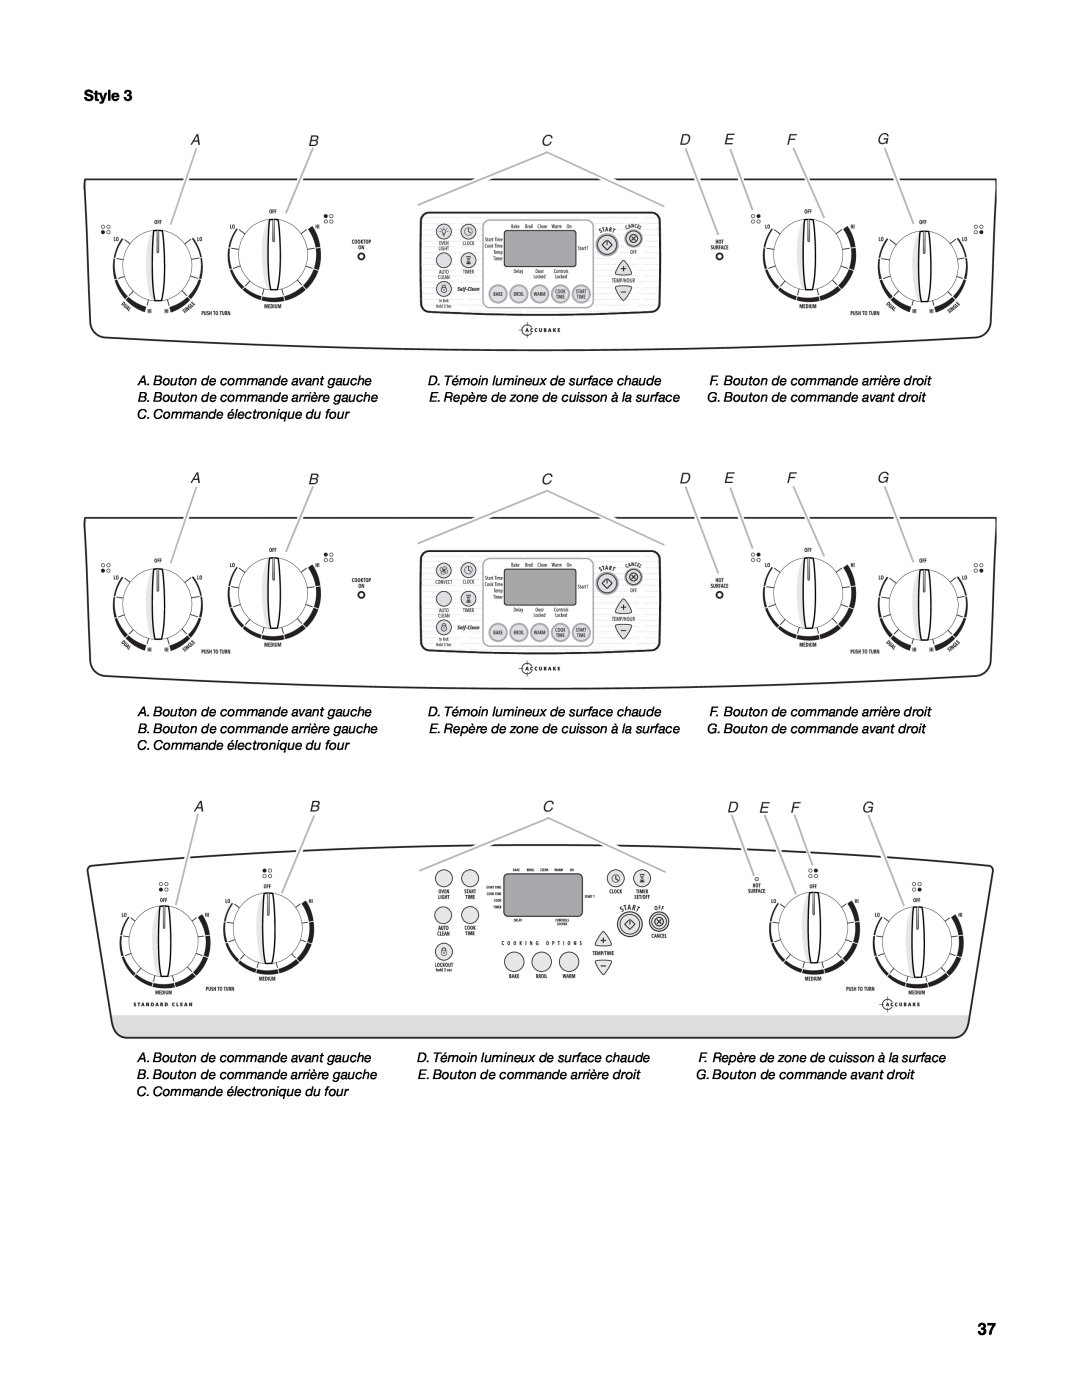 Whirlpool W10162205A manual Abcd E Fg, Abcd E F G, A. Bouton de commande avant gauche 